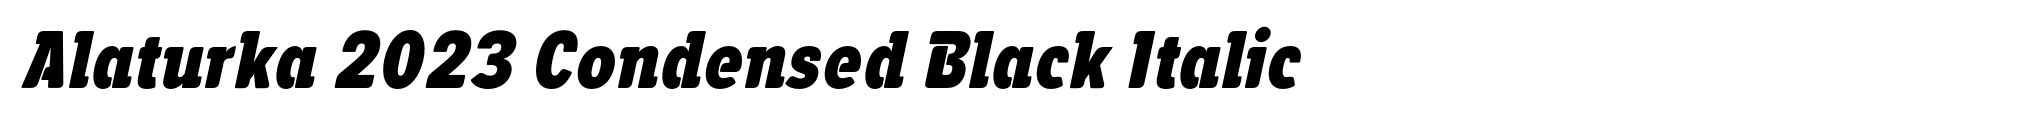 Alaturka 2023 Condensed Black Italic image